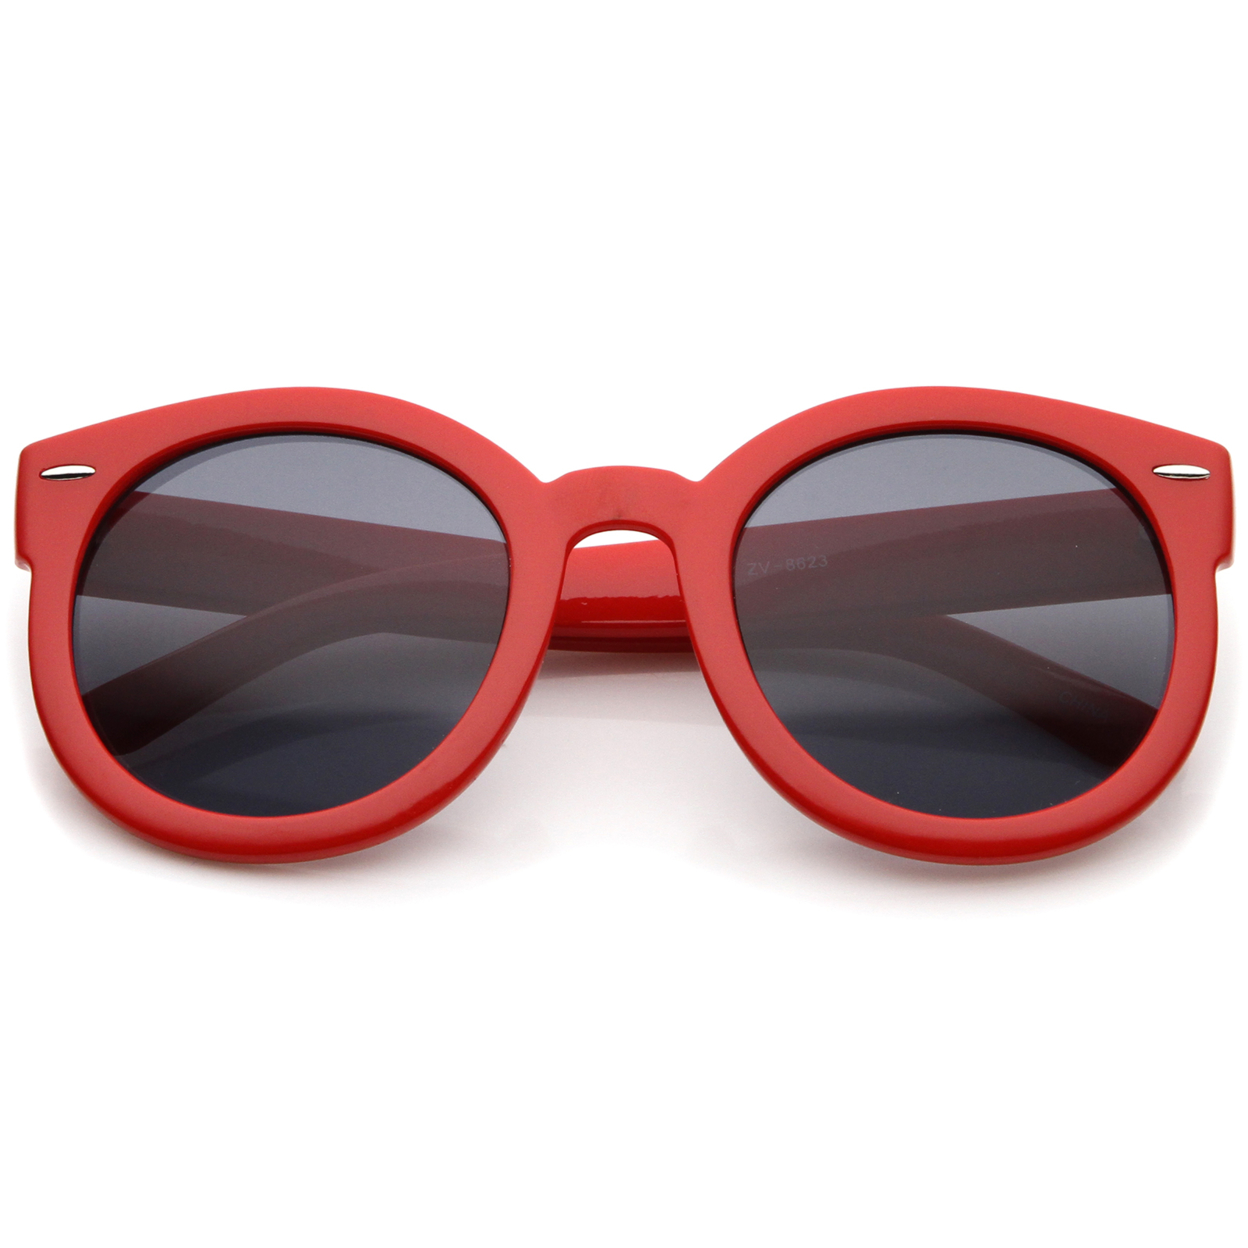 Women's Retro Oversize Horn Rimmed P3 Round Sunglasses 52mm - Red / Smoke